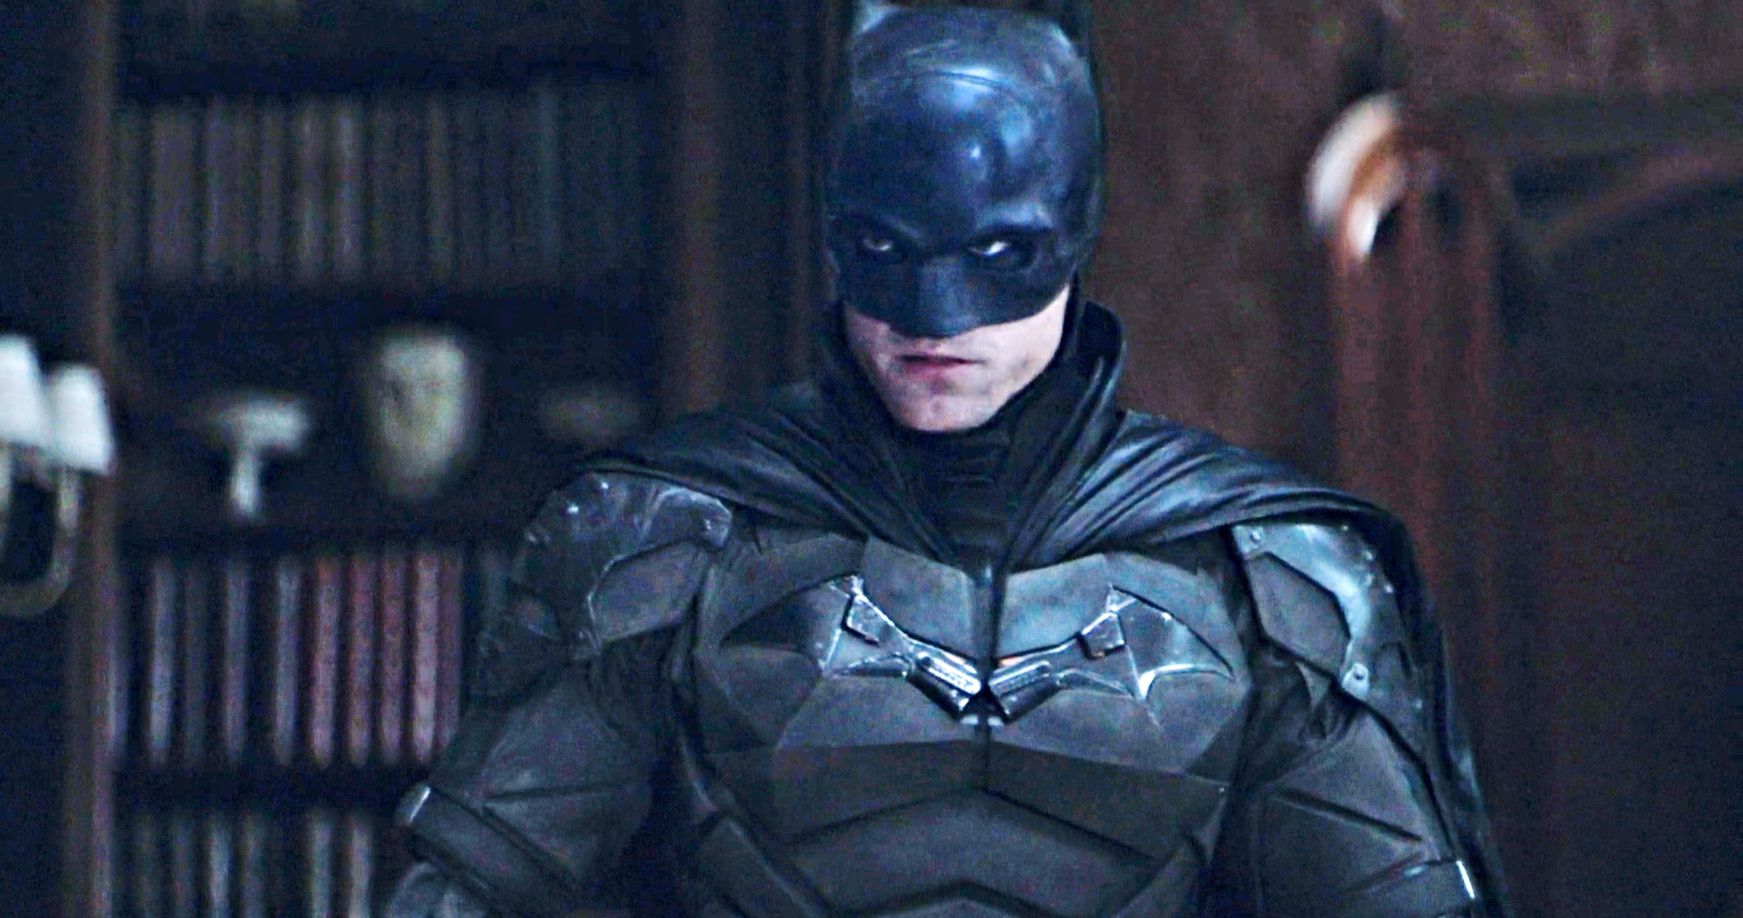 Why The Batman Isn't an Origins Movie According to Director Matt Reeves